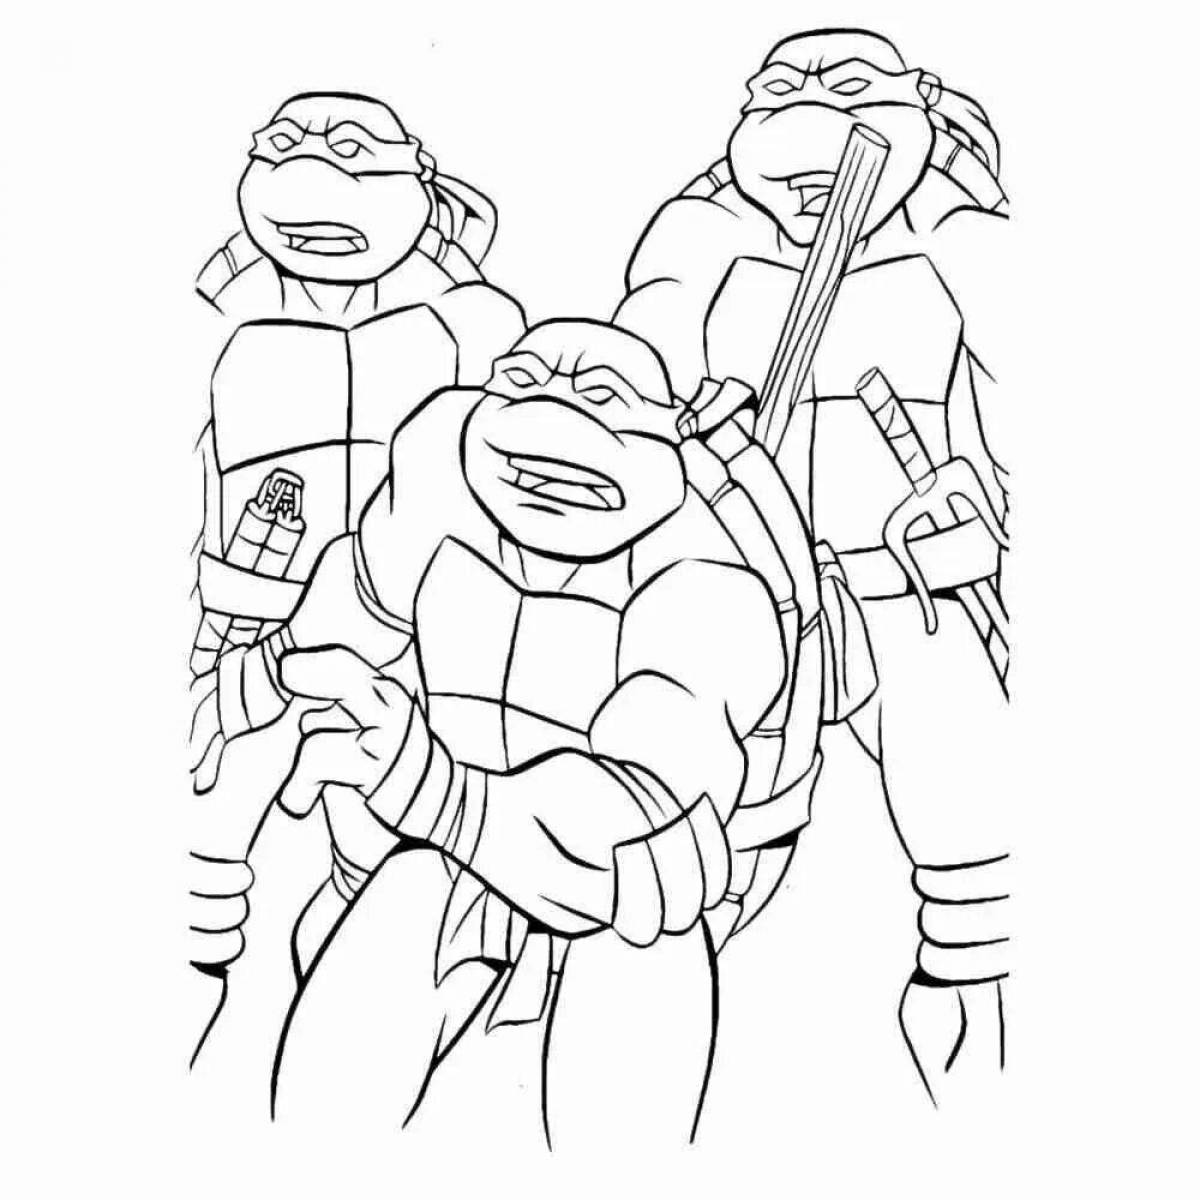 Rafael turtle coloring page